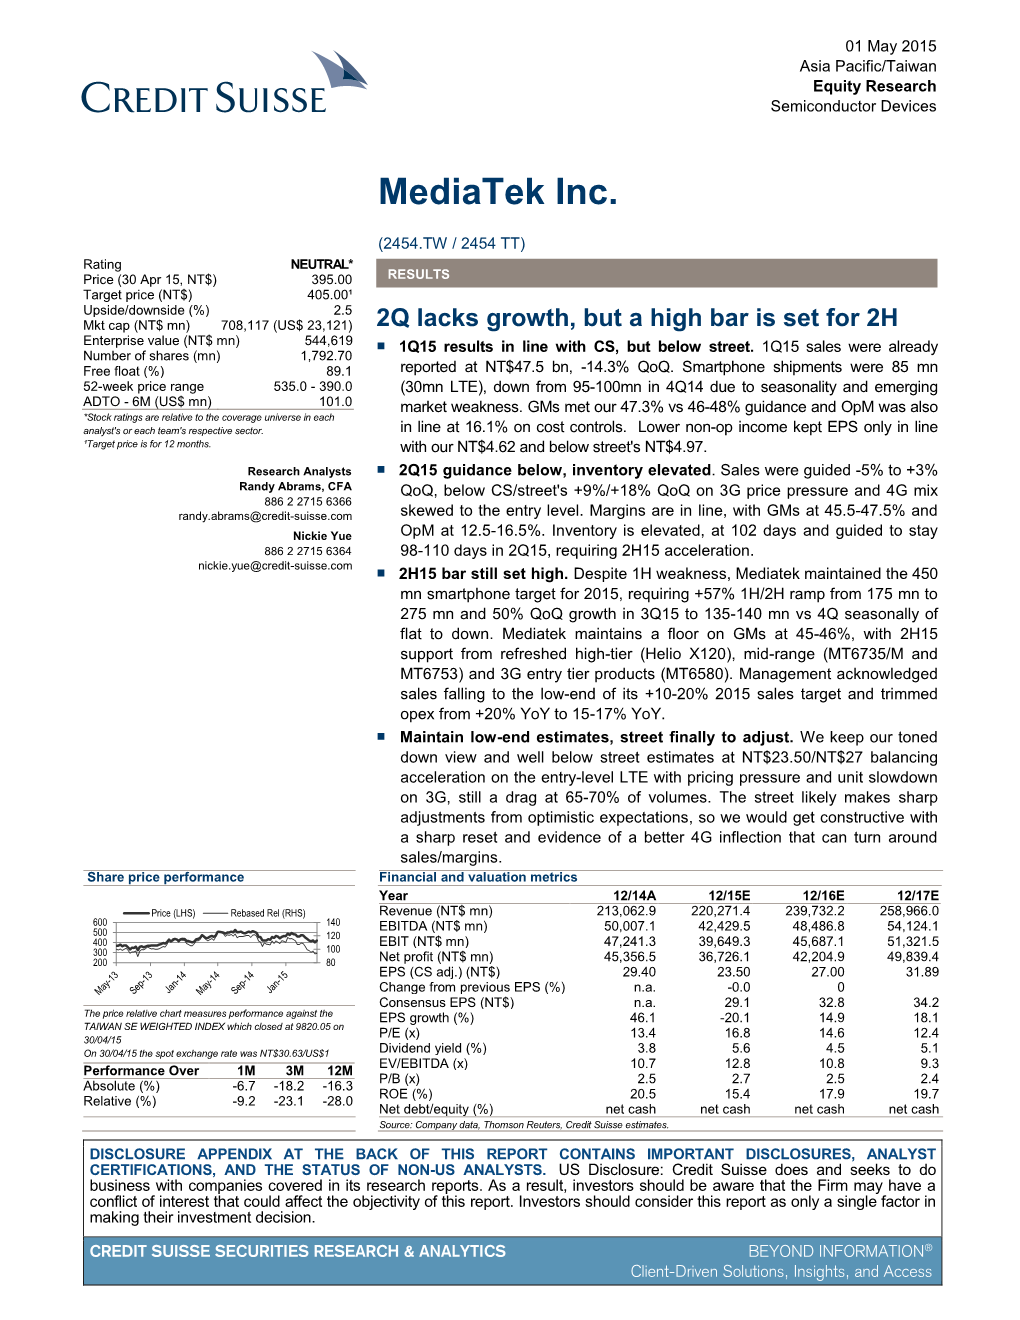 Mediatek Inc